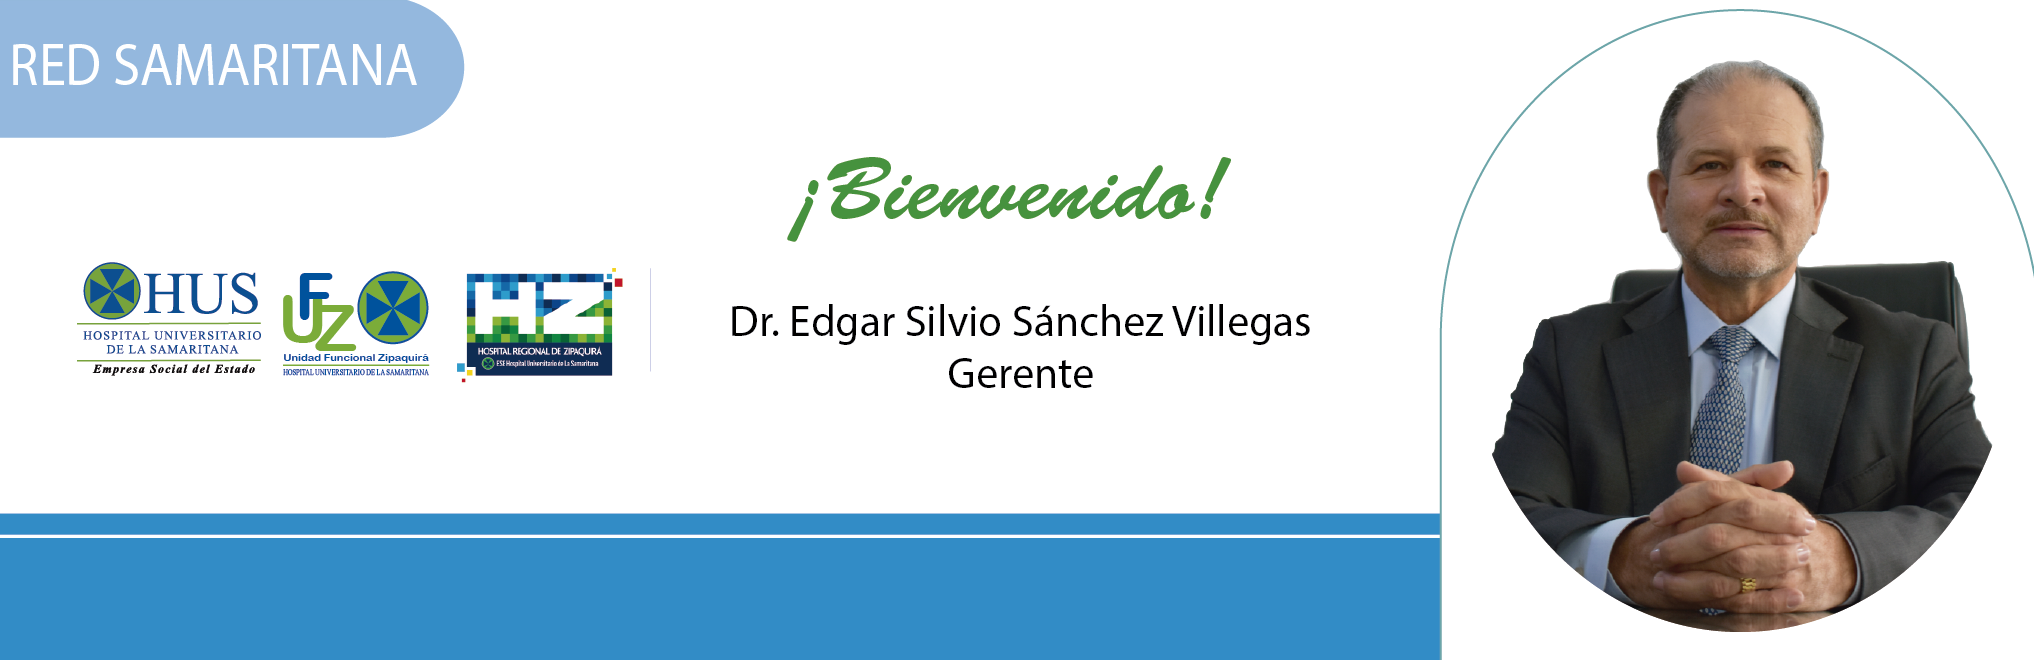 Presentacion Gerente E.S.E Hospital Universitario de La Samaritana